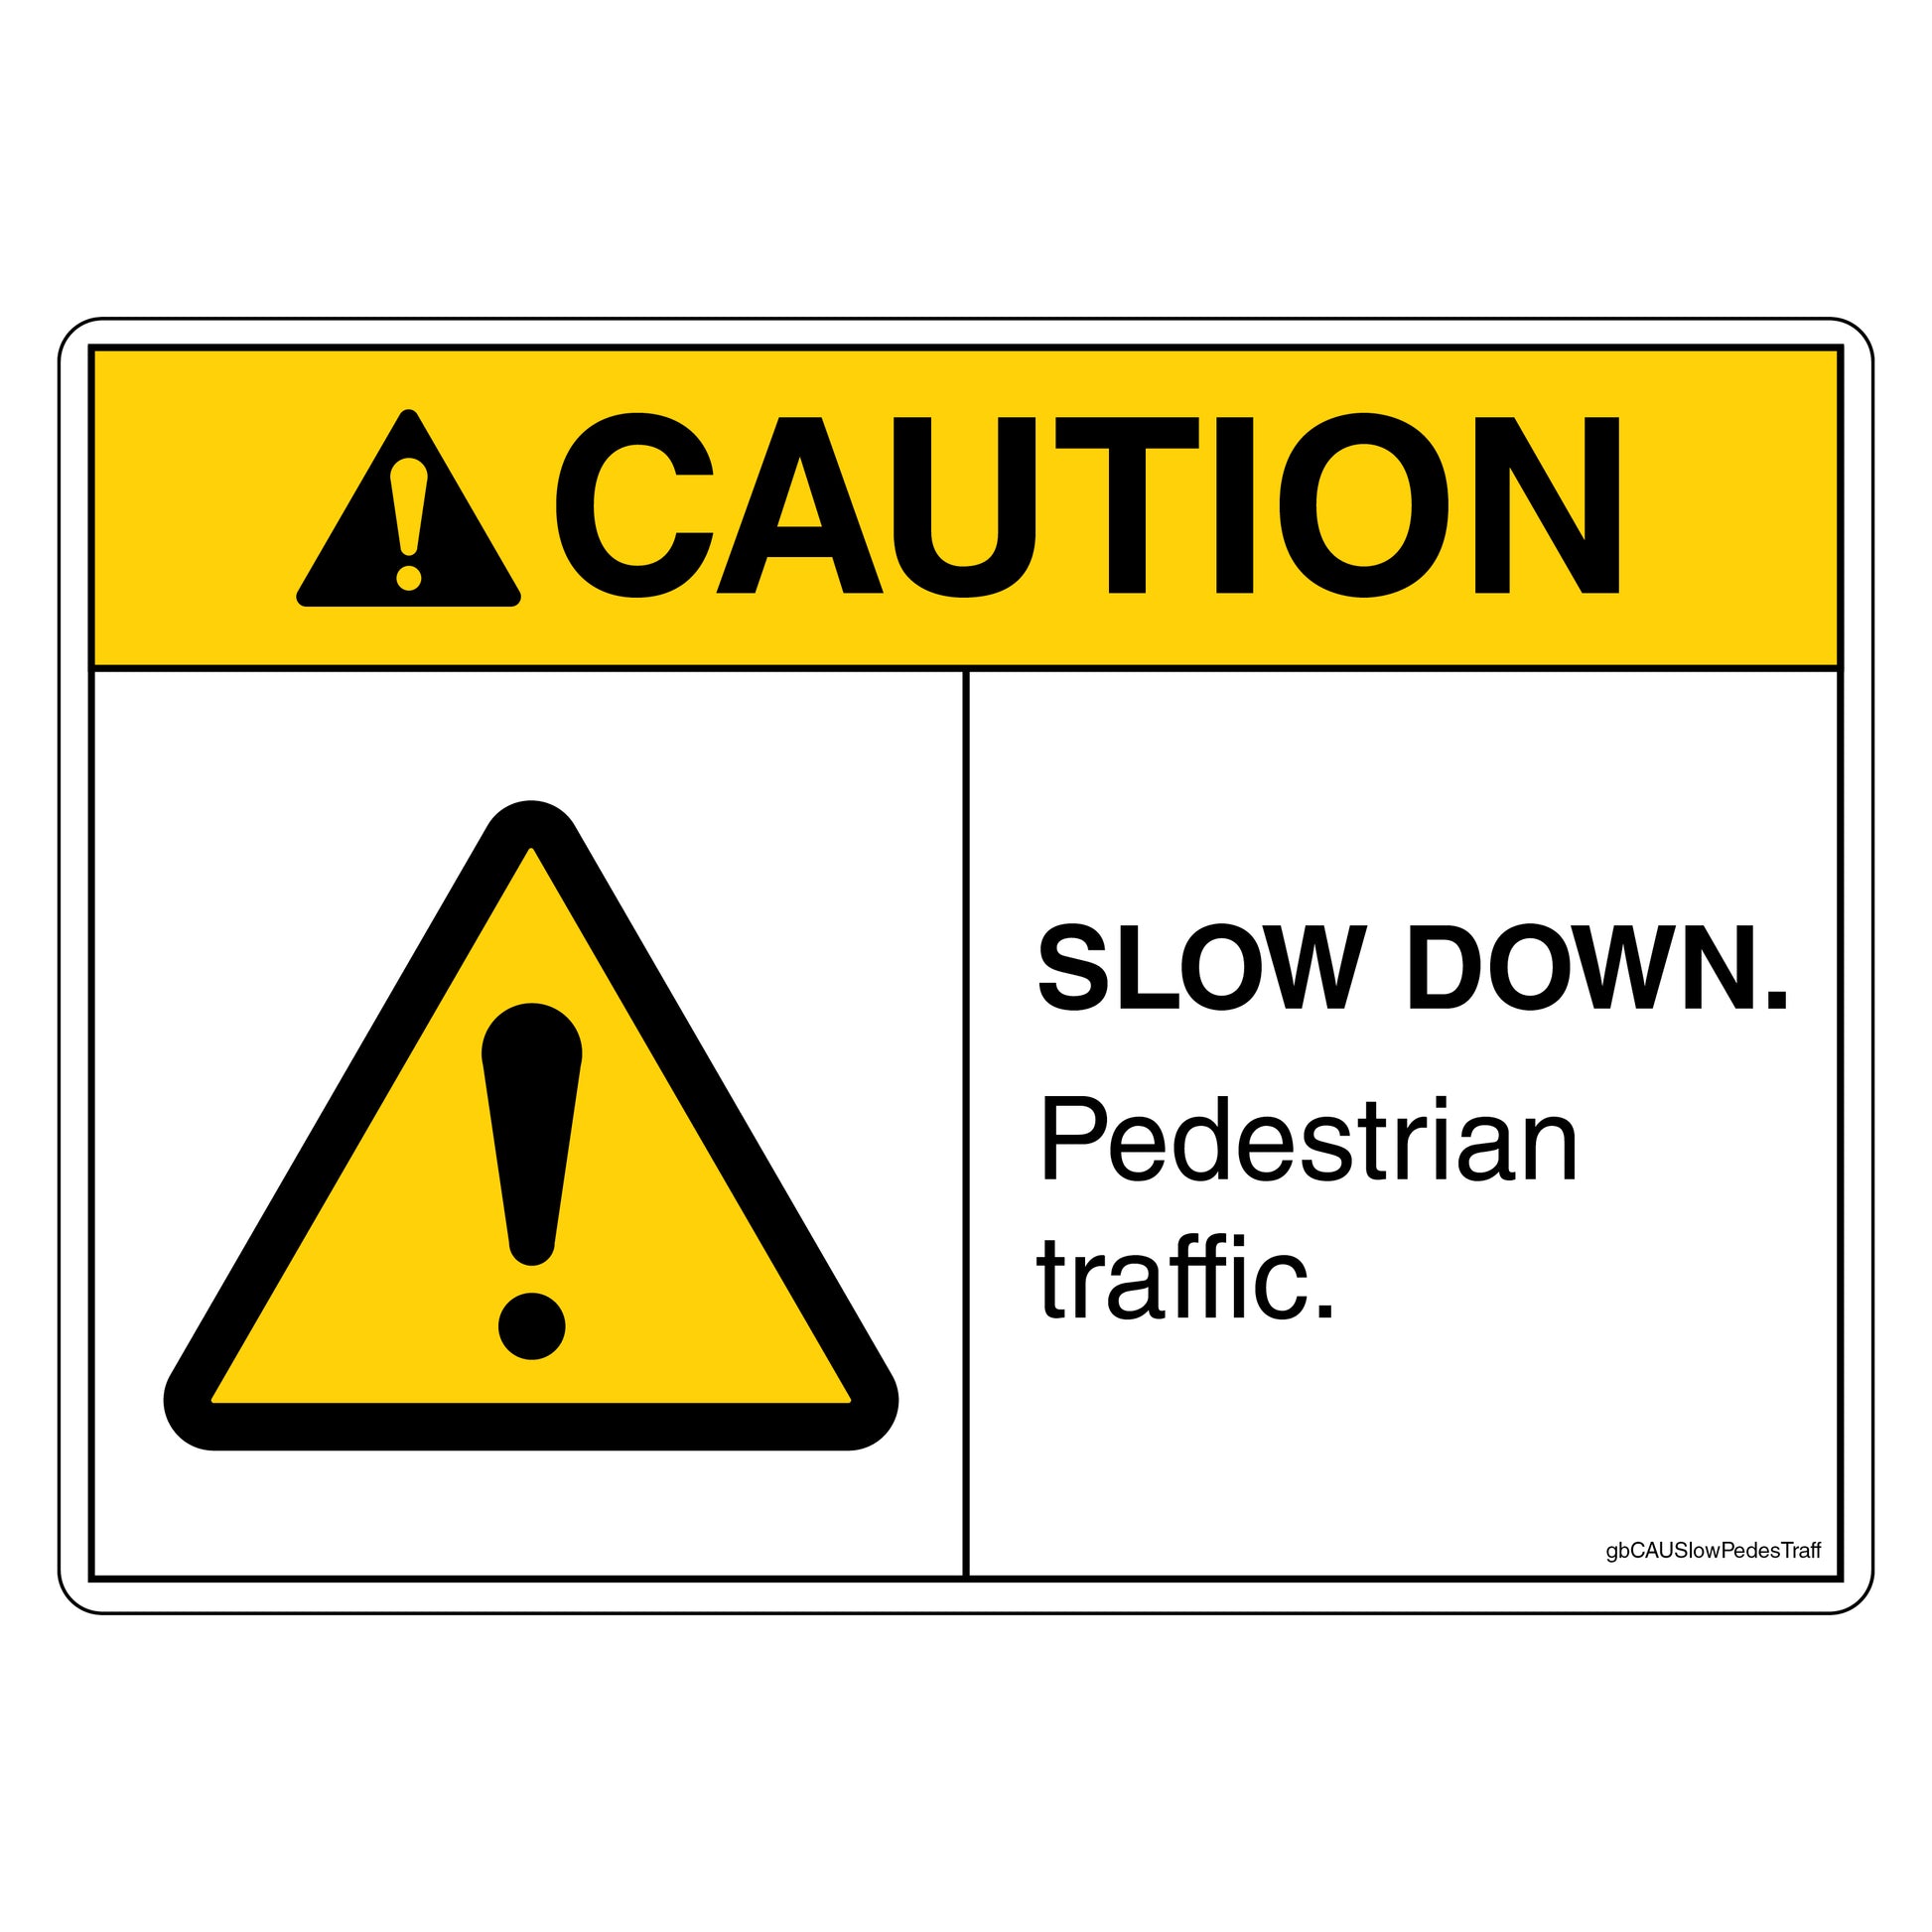 Caution Slow Down Pedestrian Traffic Decal.